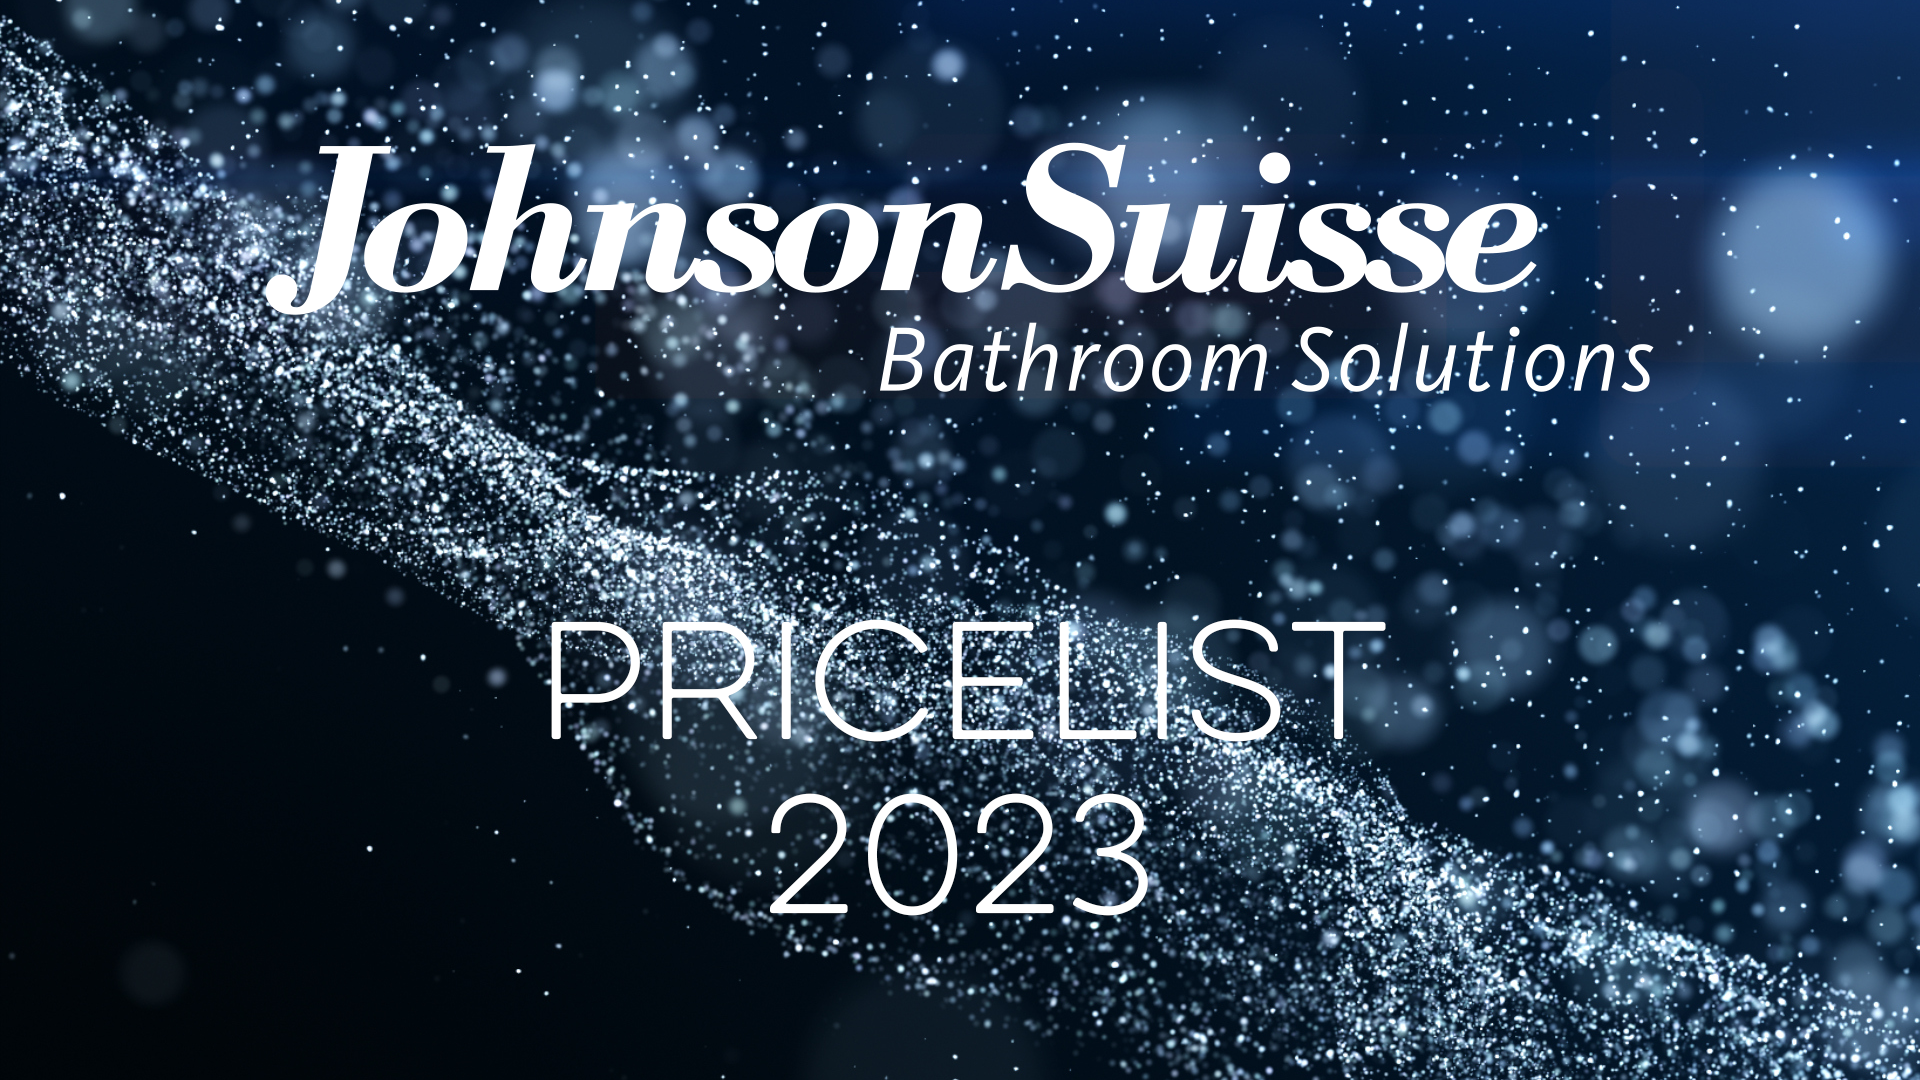 Johnson Suisse Pricelist 2023